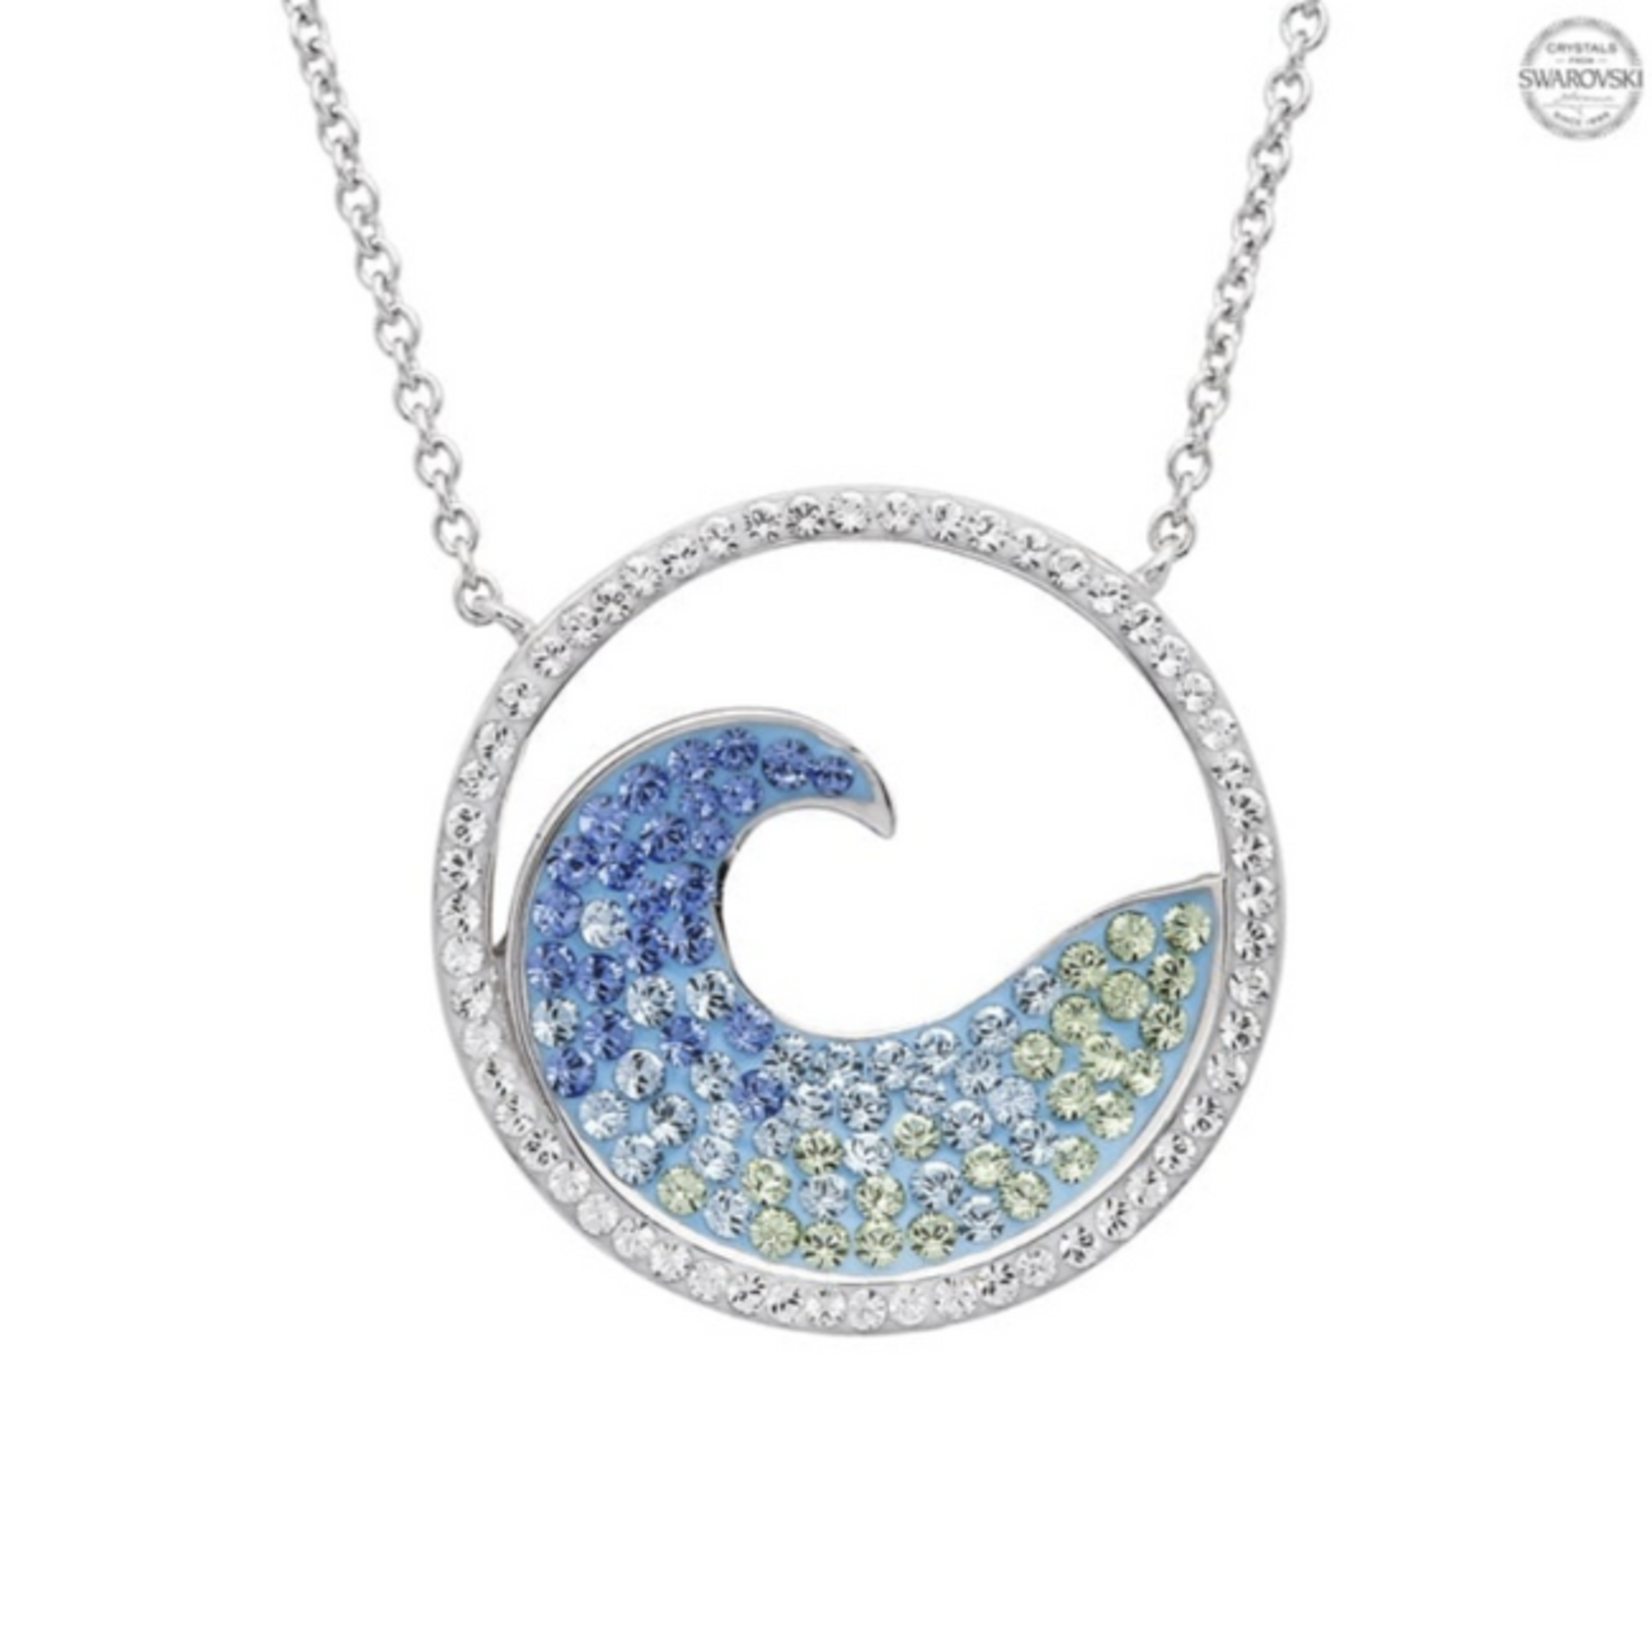 Shanore S/s Wave Necklace White + Blue Swarovski